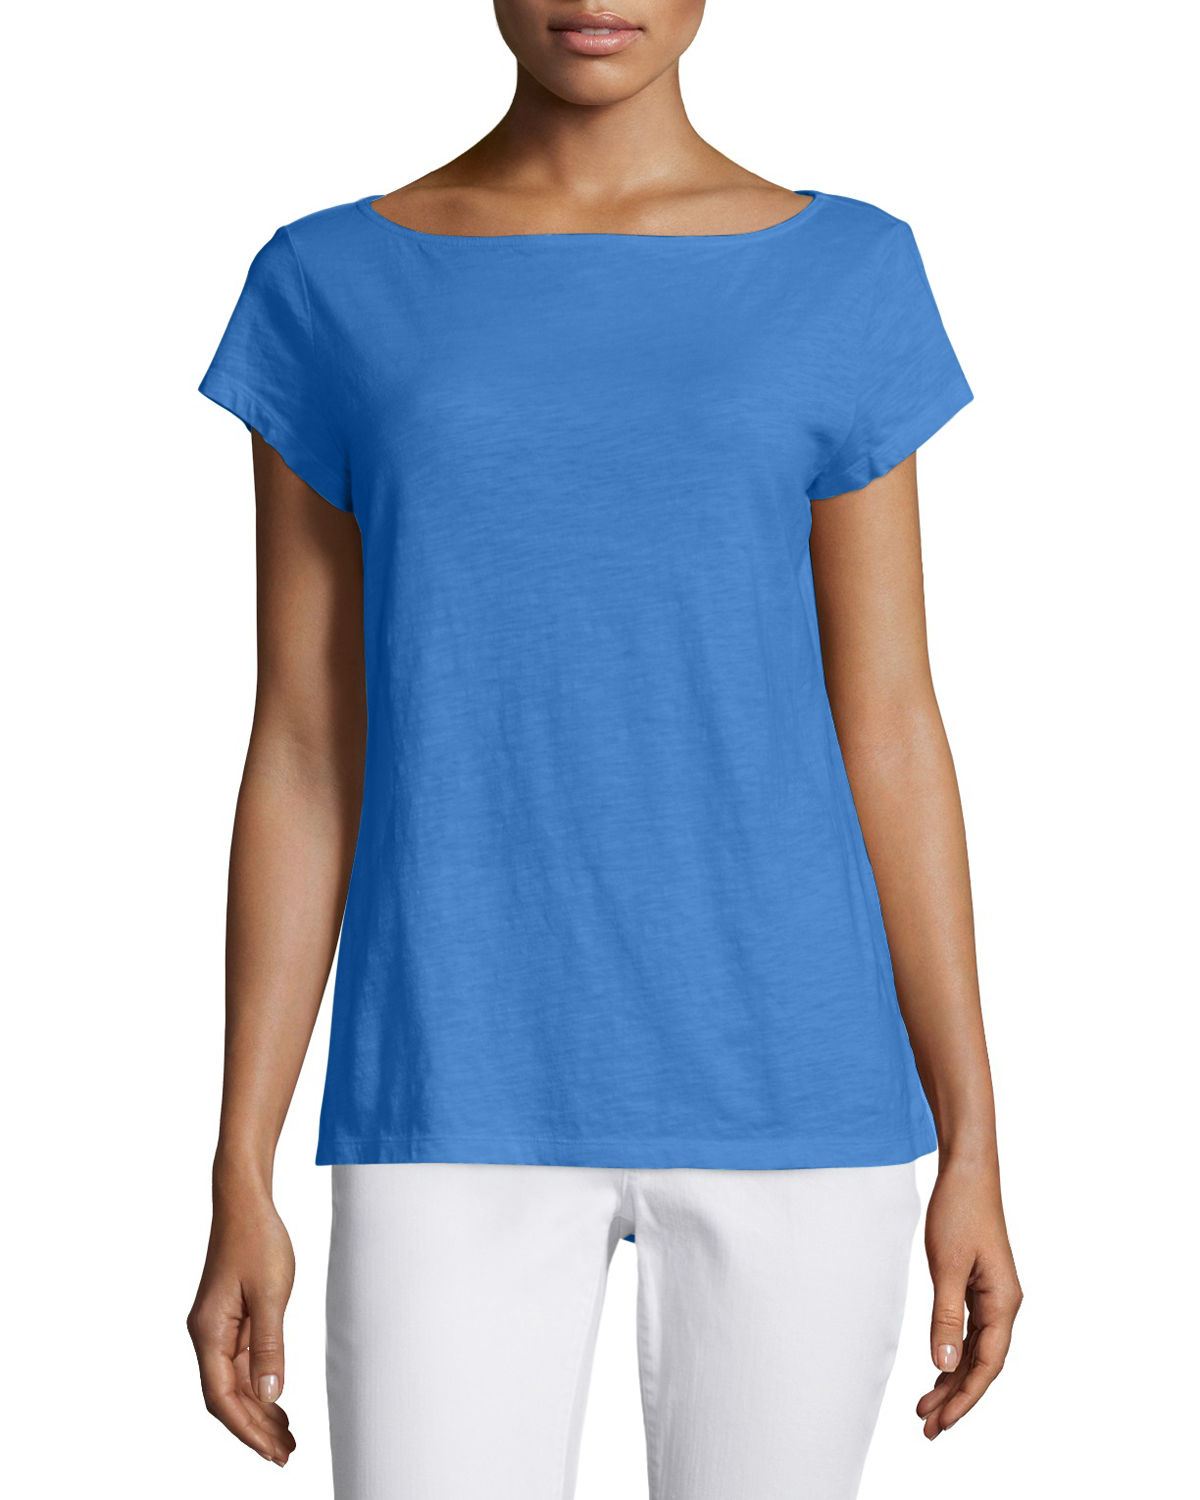 Lyst - Eileen Fisher Cap-sleeve Organic Cotton Slub Top in Blue